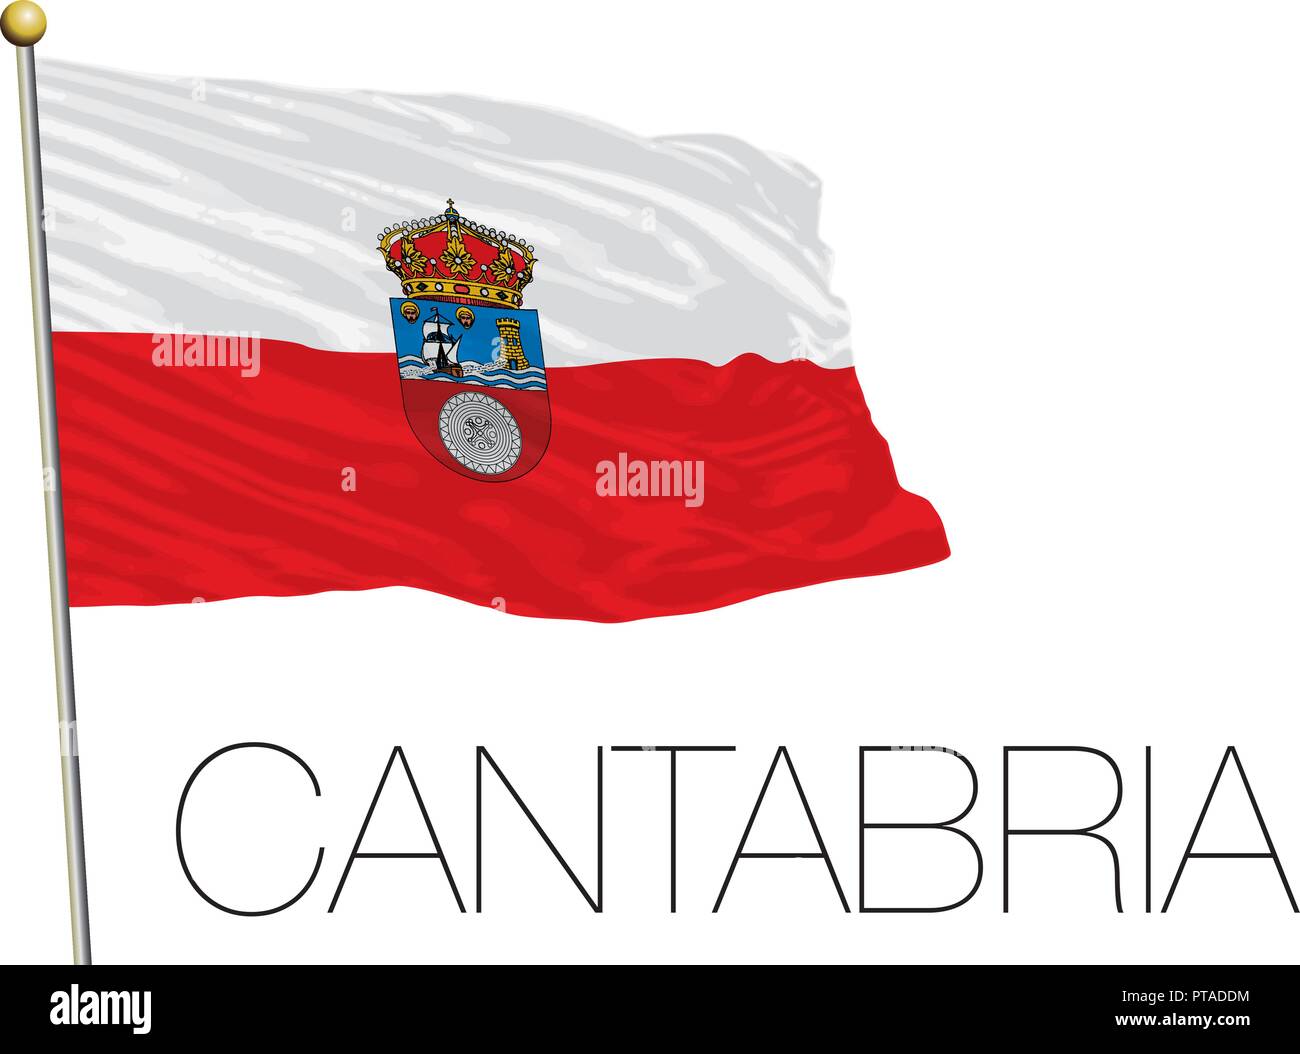 Cantabria gazzetta bandiera regionale, Spagna, illustrazione vettoriale Illustrazione Vettoriale